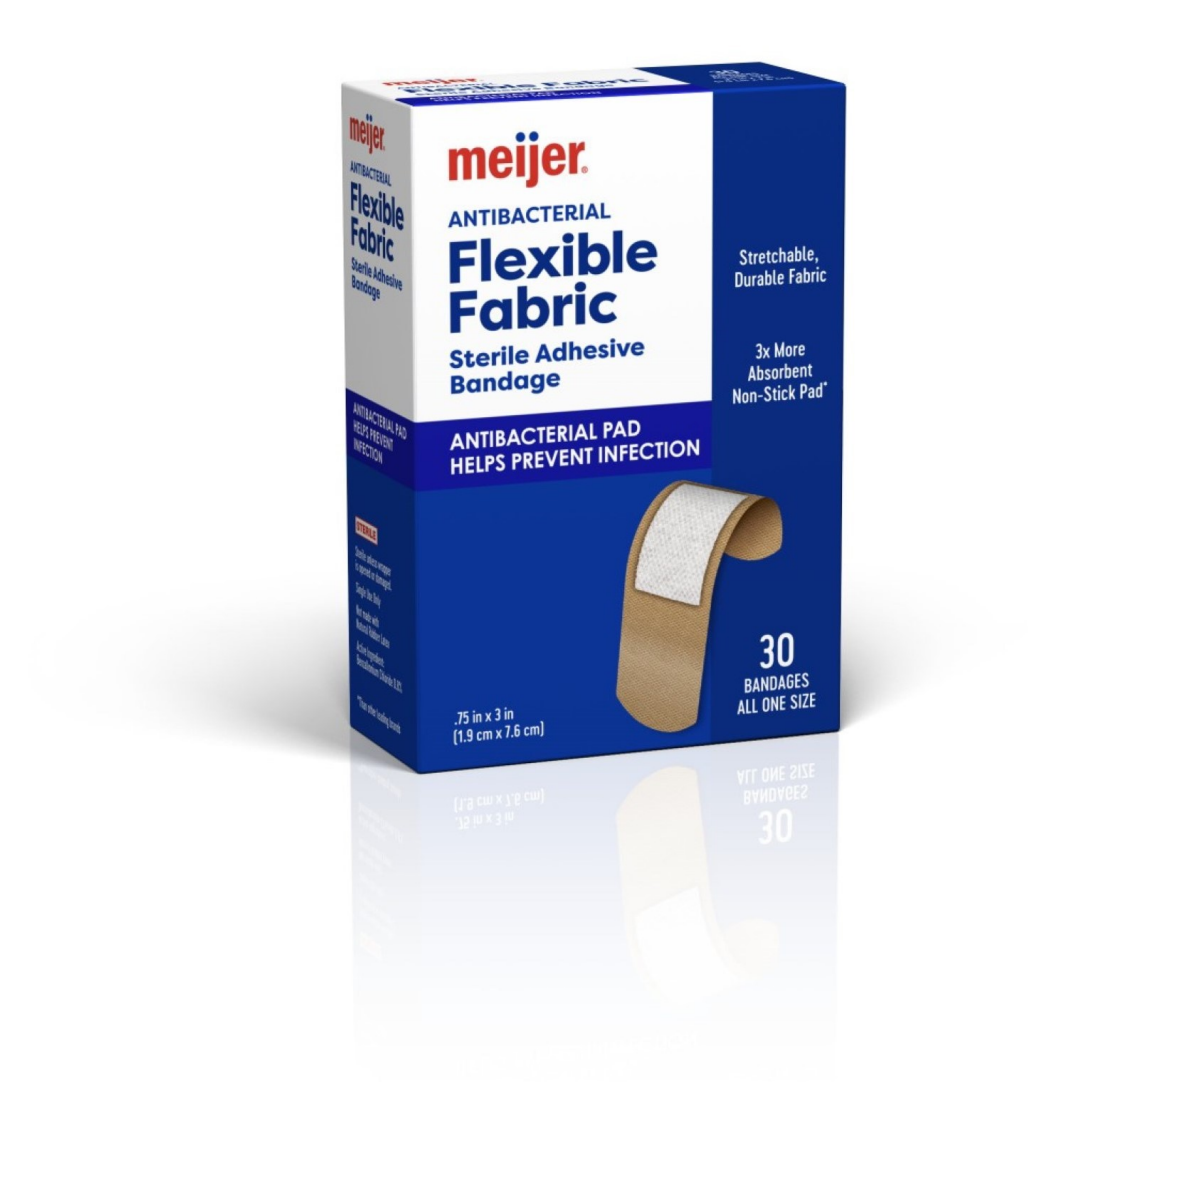 slide 21 of 21, Meijer Flexible Fabric Bandages, 30 ct